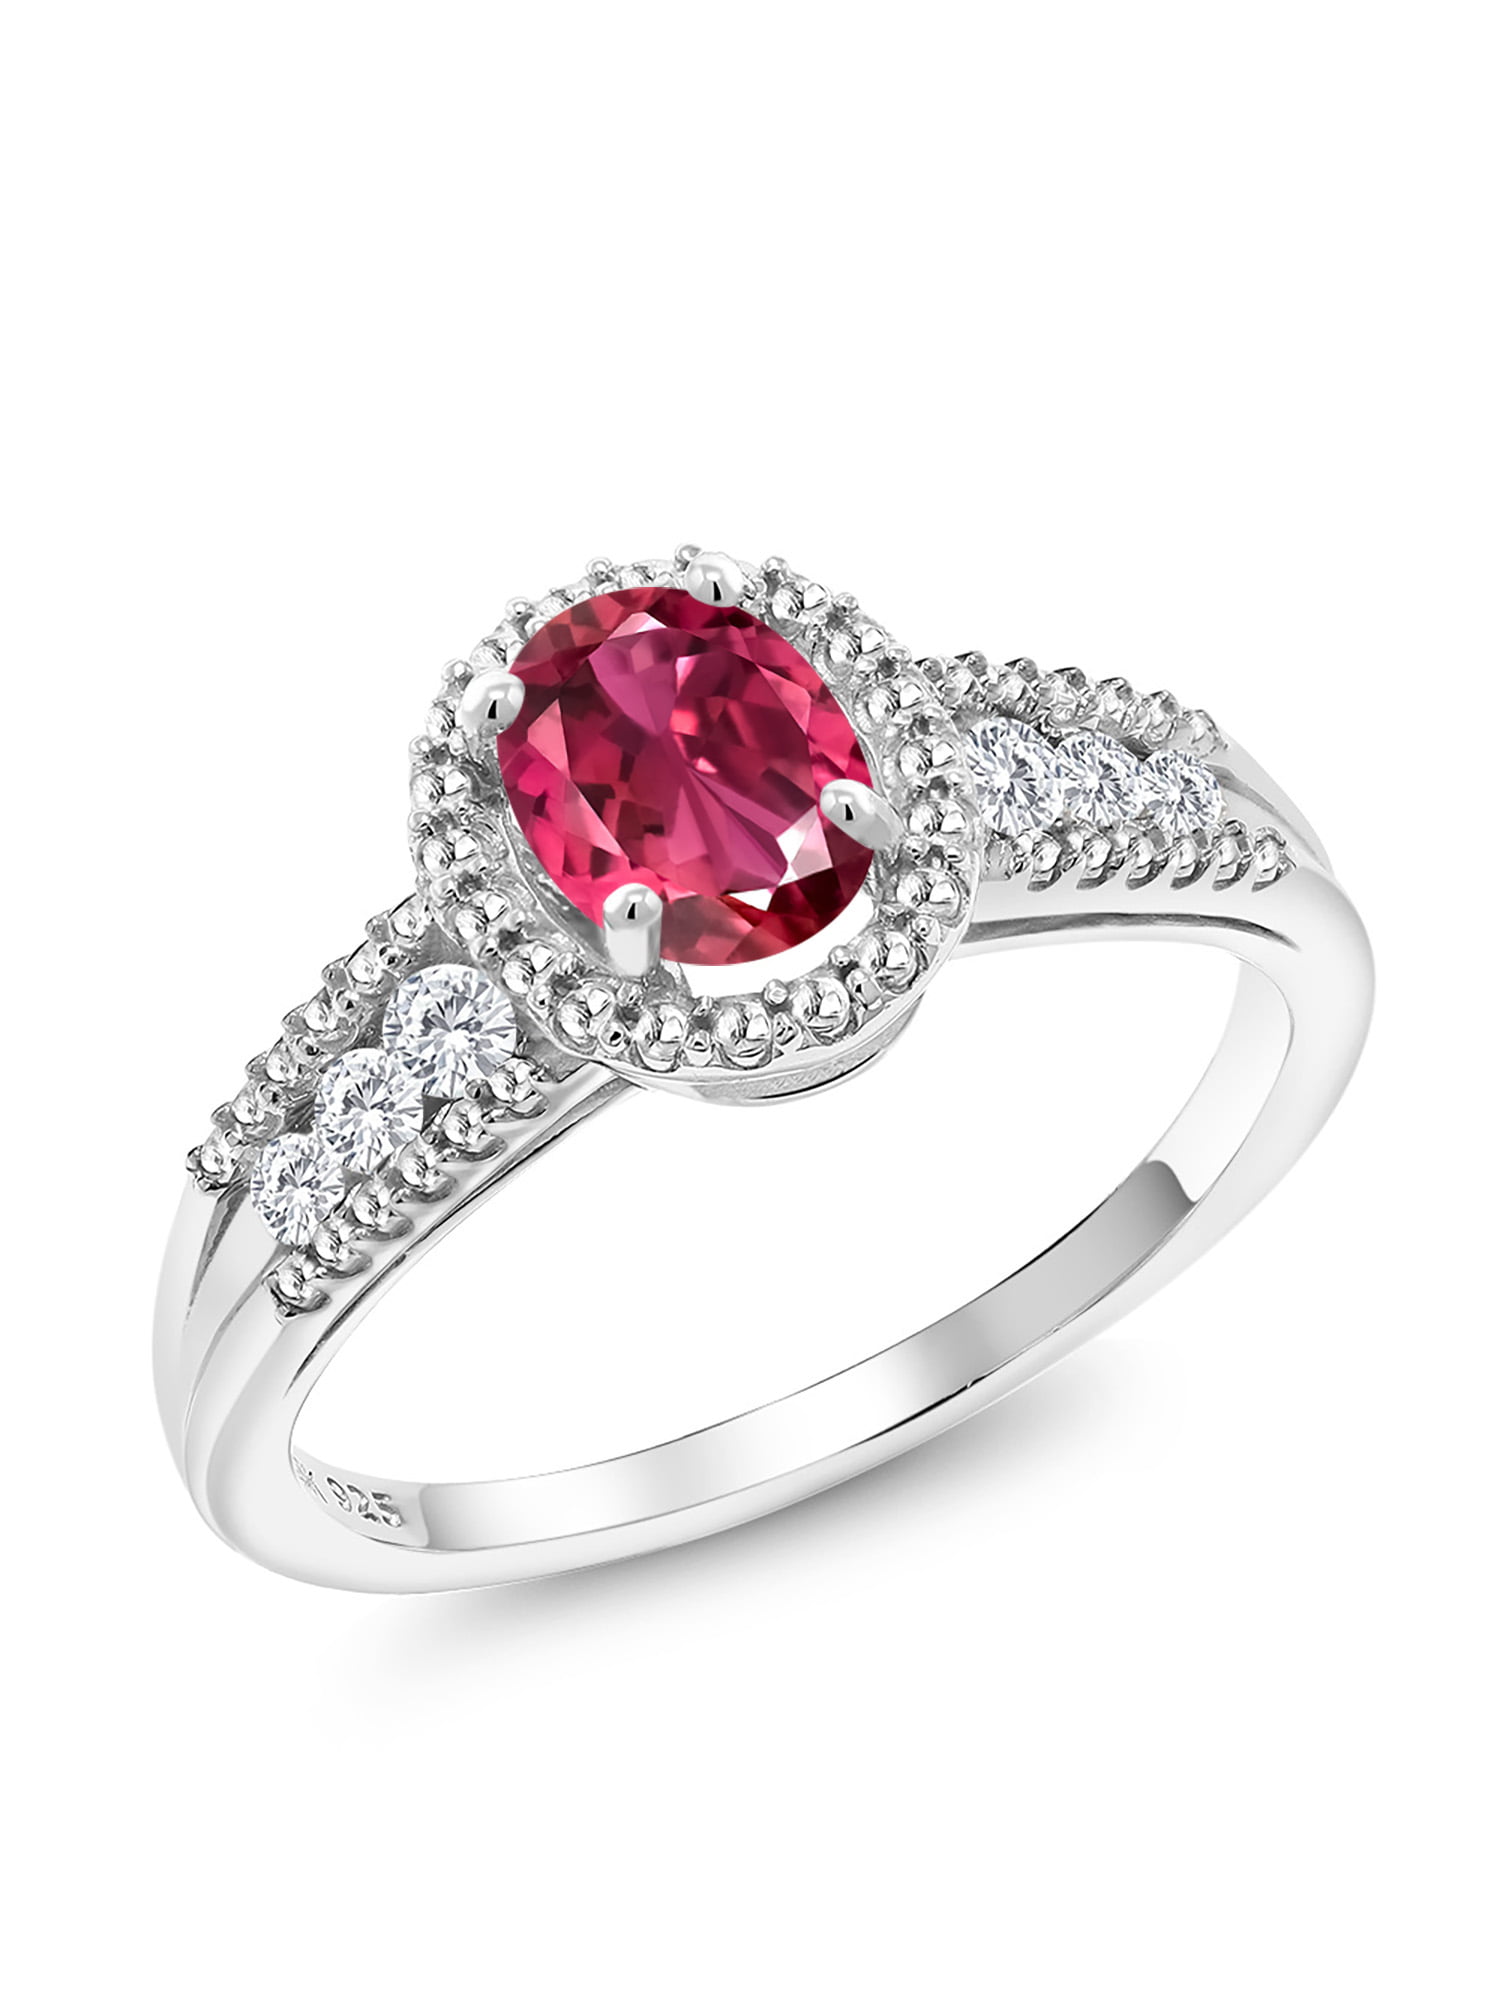 Gem Stone King 0.89 Ct 3.5mm Round Pink Tourmaline Red Rhodolite Garnet 925 Sterling Silver Wedding Band Ring